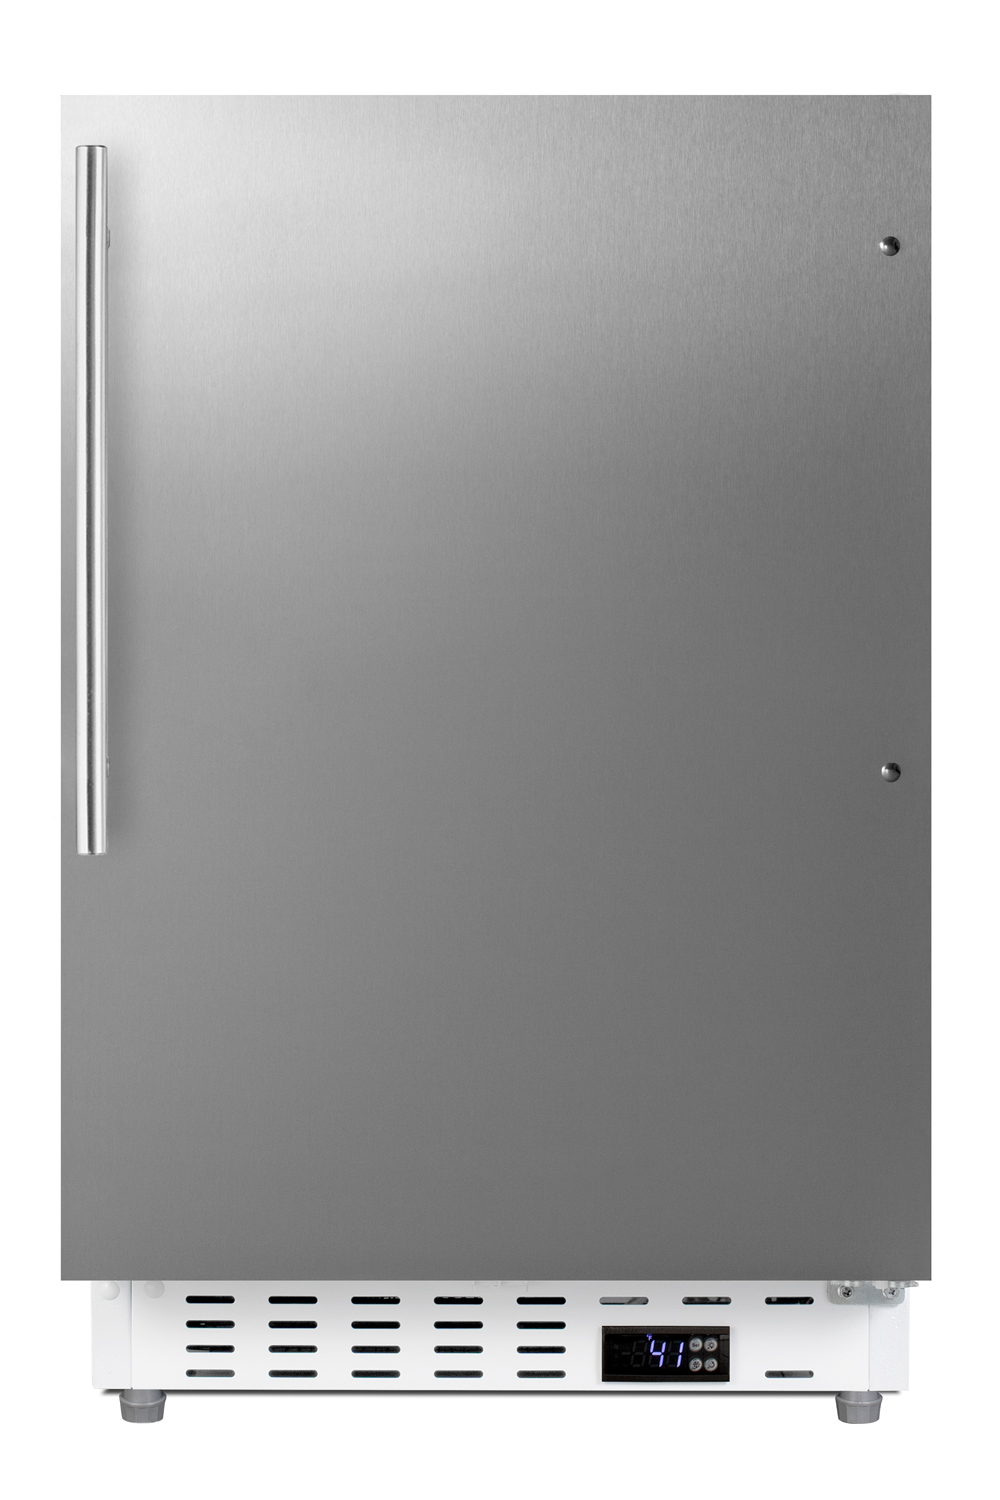 Summit 21" Wide Built-In All-Refrigerator, ADA Compliant